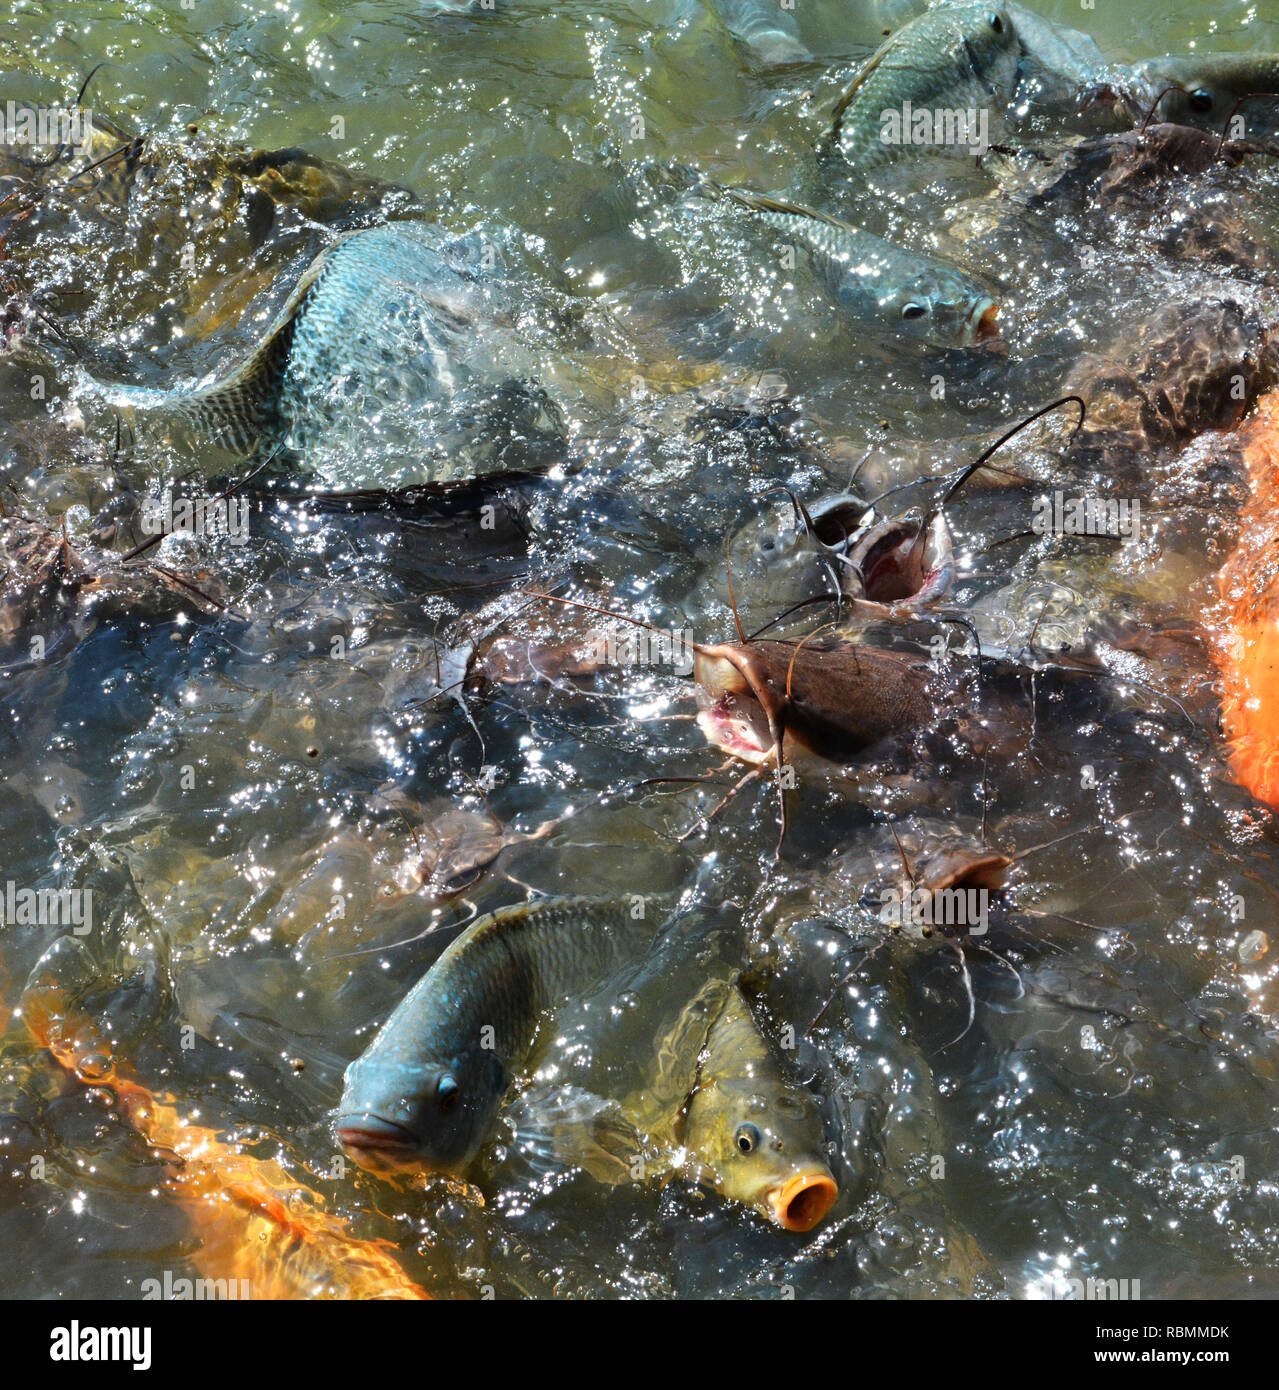 Feed fish / Many fish feed food a lot of feeding Catfish , Tilapia, carp and orange common carp - freshwater fish in ponds Stock Photo